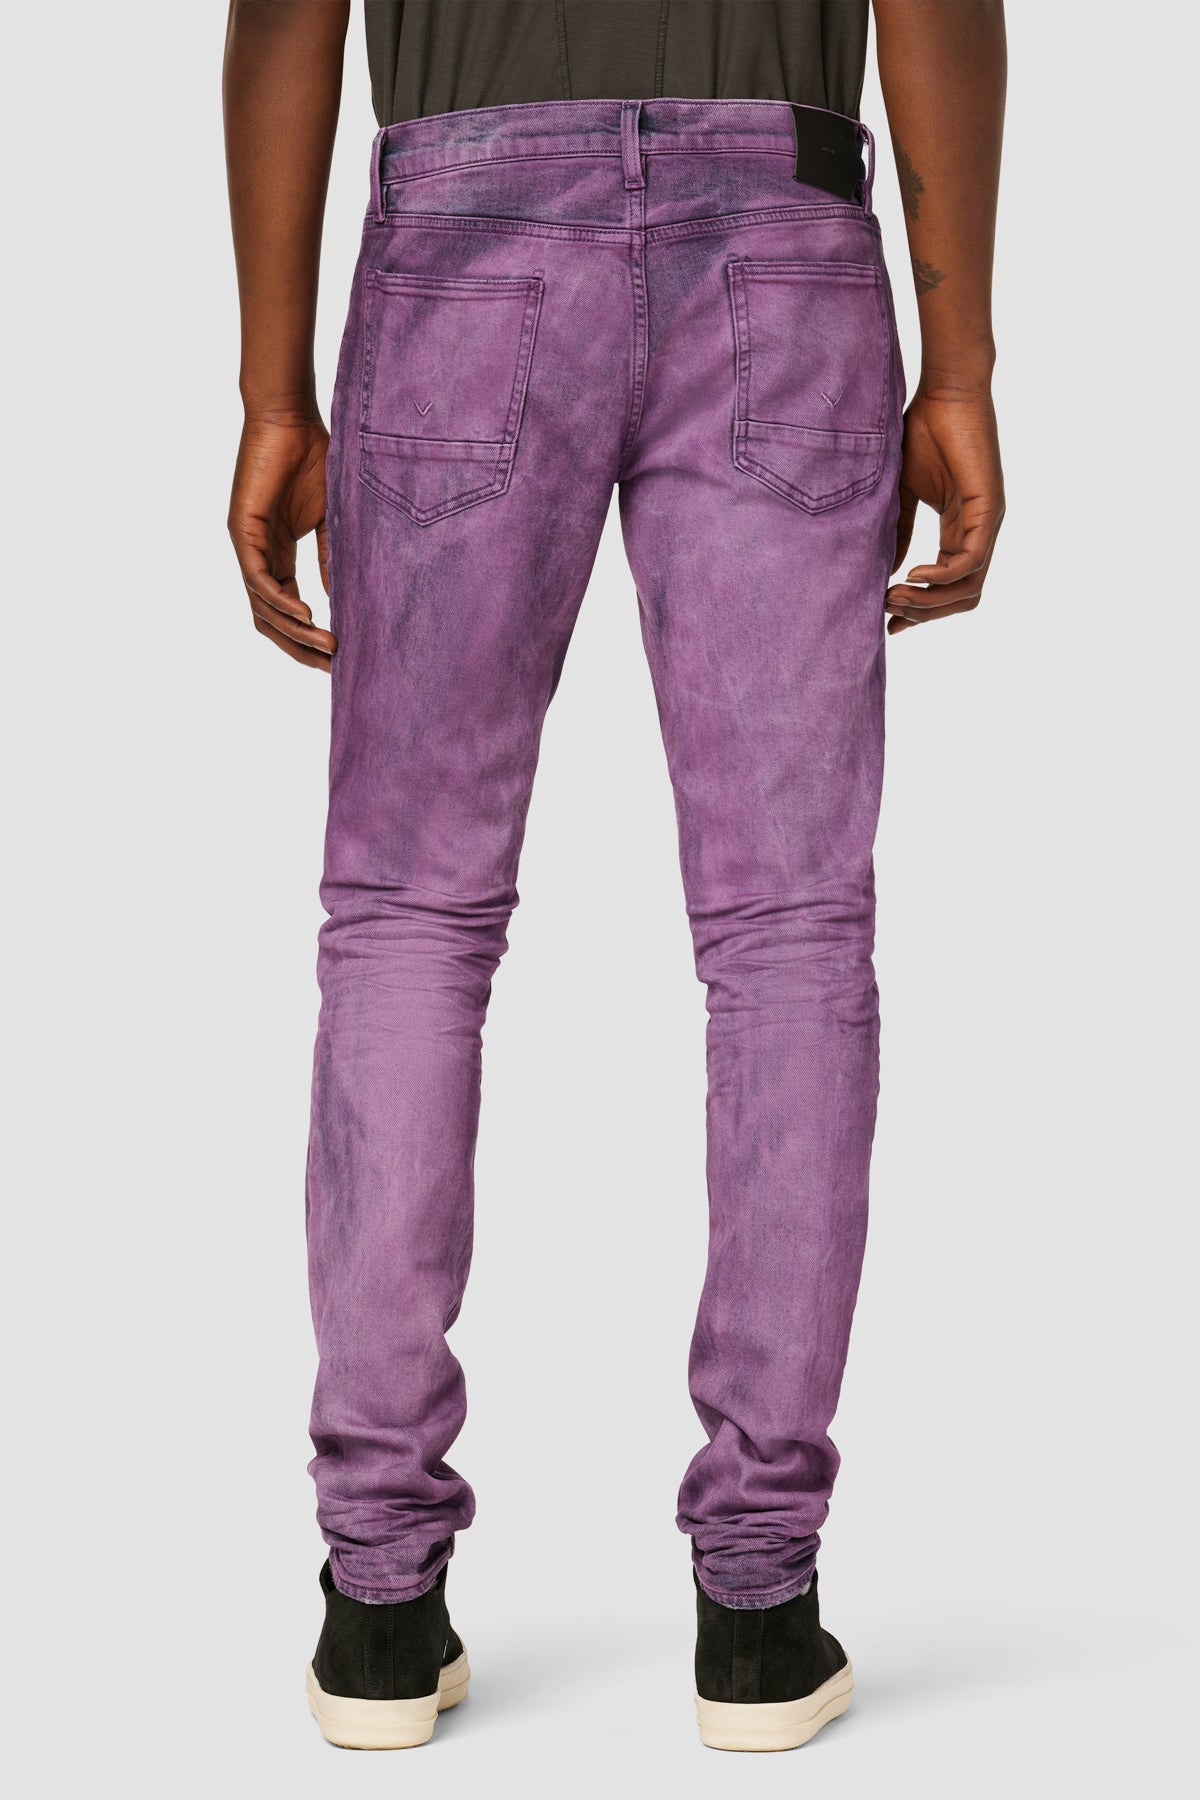 Slim jean Purple brand Anthracite size 36 US in Cotton - elasthane